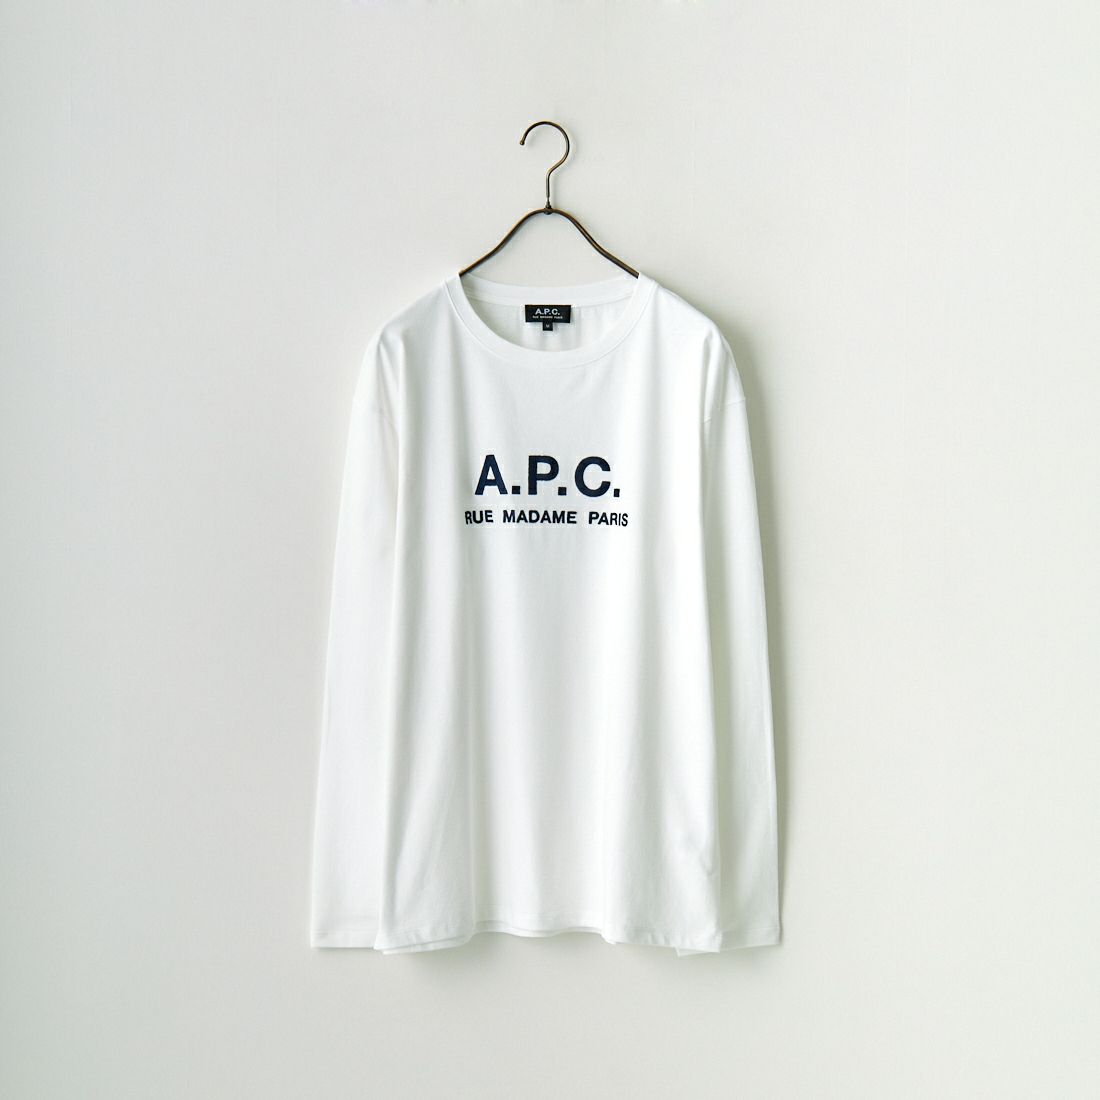 A.P.C. [アー・ペー・セー] ロゴ刺繍 ロングスリーブTシャツ [RUE